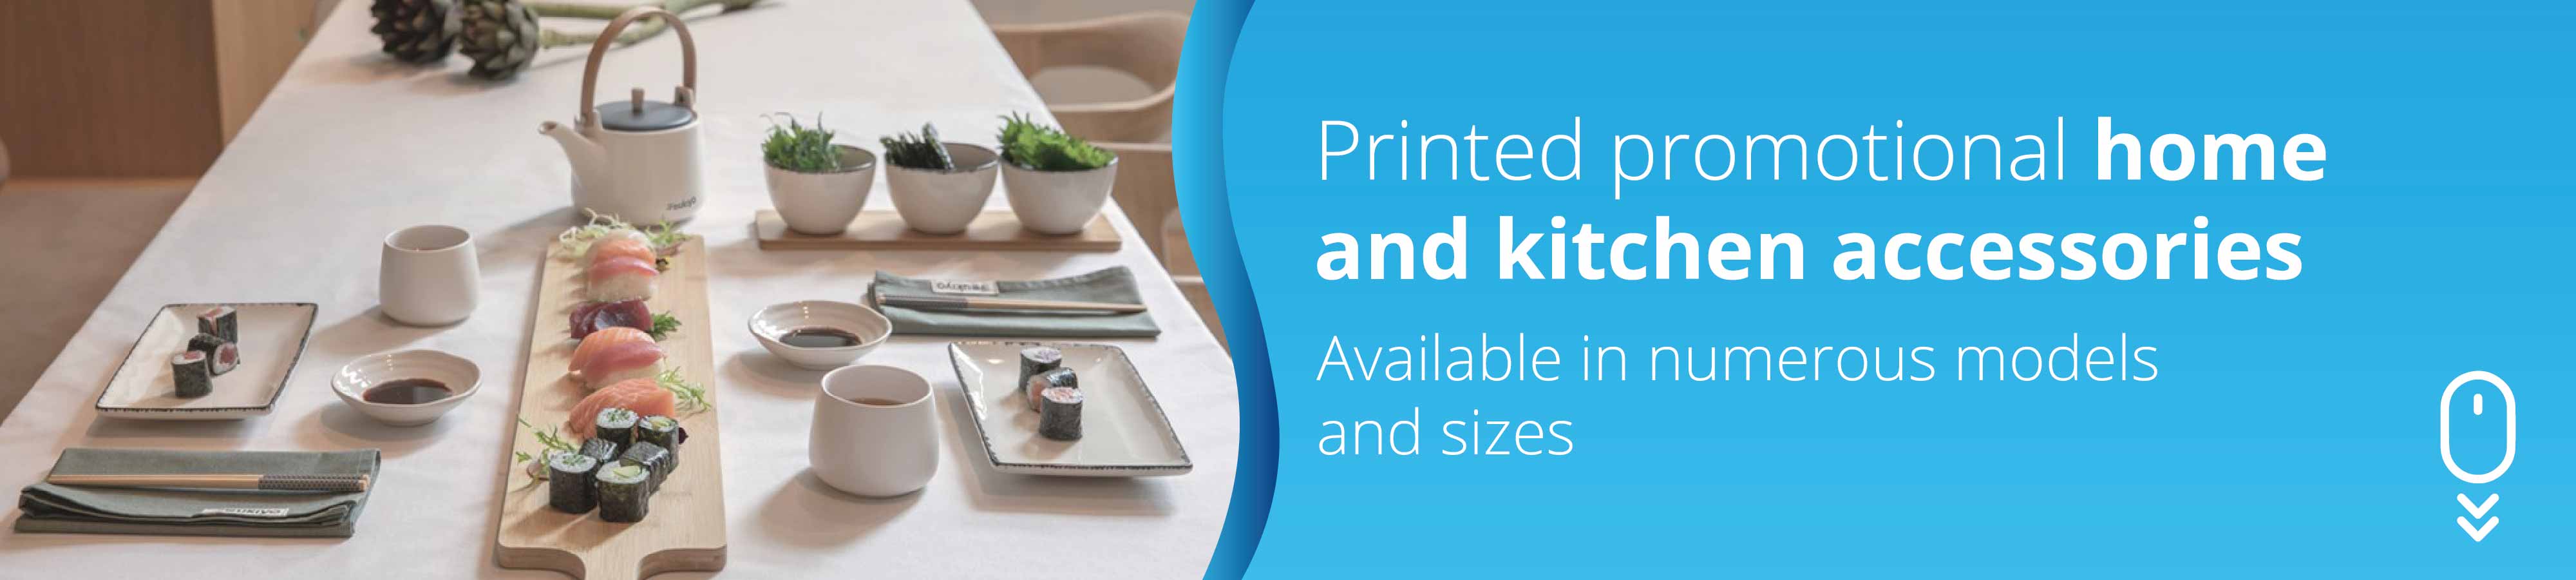 printed-kitchen-home-objectsdbDqYjspJrVQU